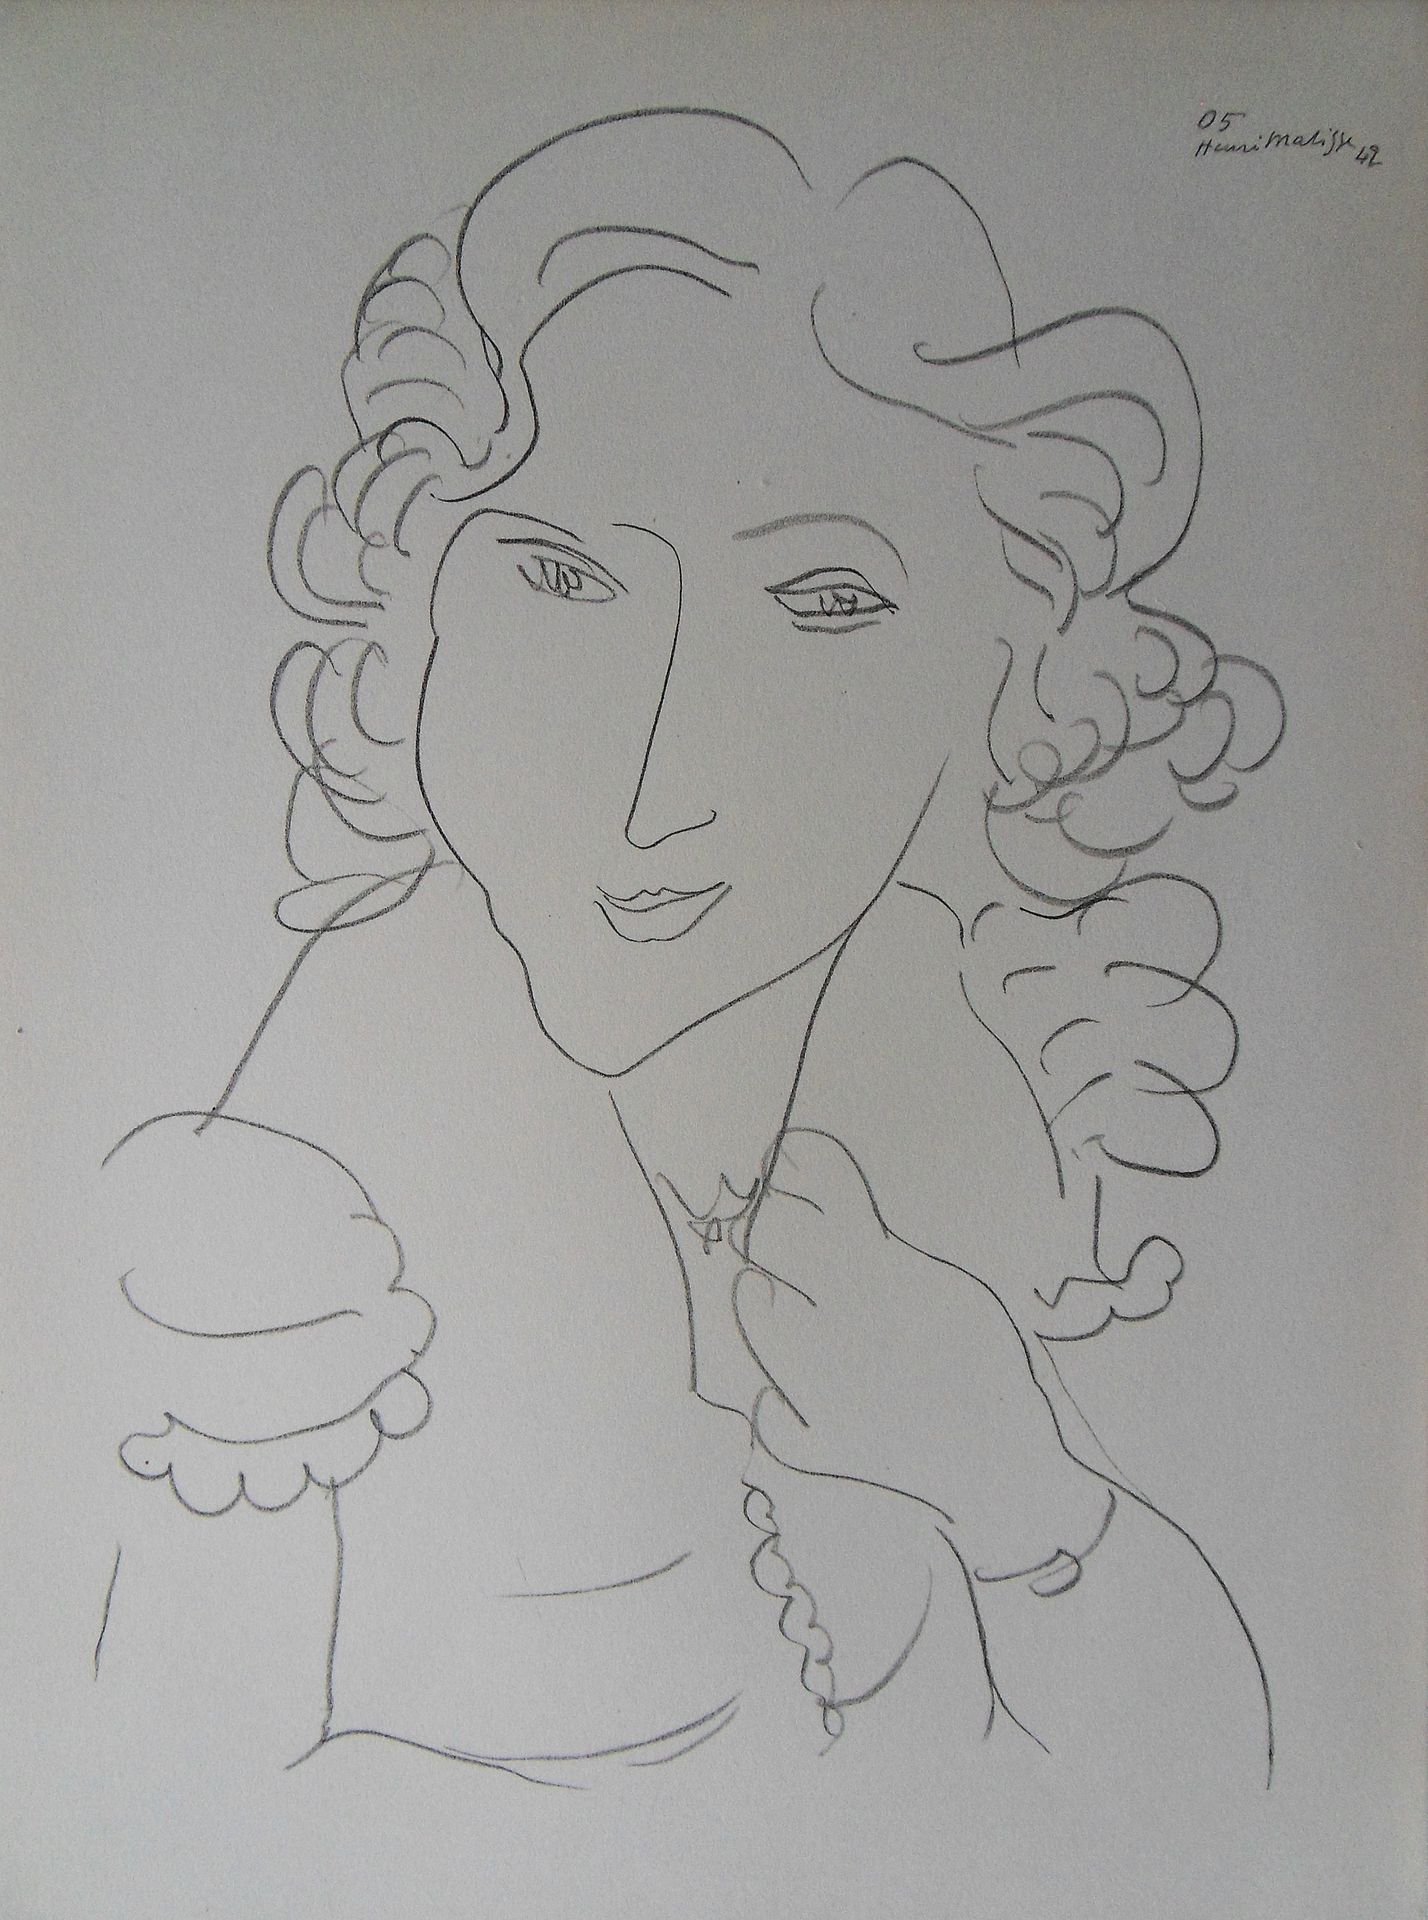 Henri MATISSE Henri Matisse (1869-1954)(d'après)

La duchesse, 1943

Lithographi&hellip;